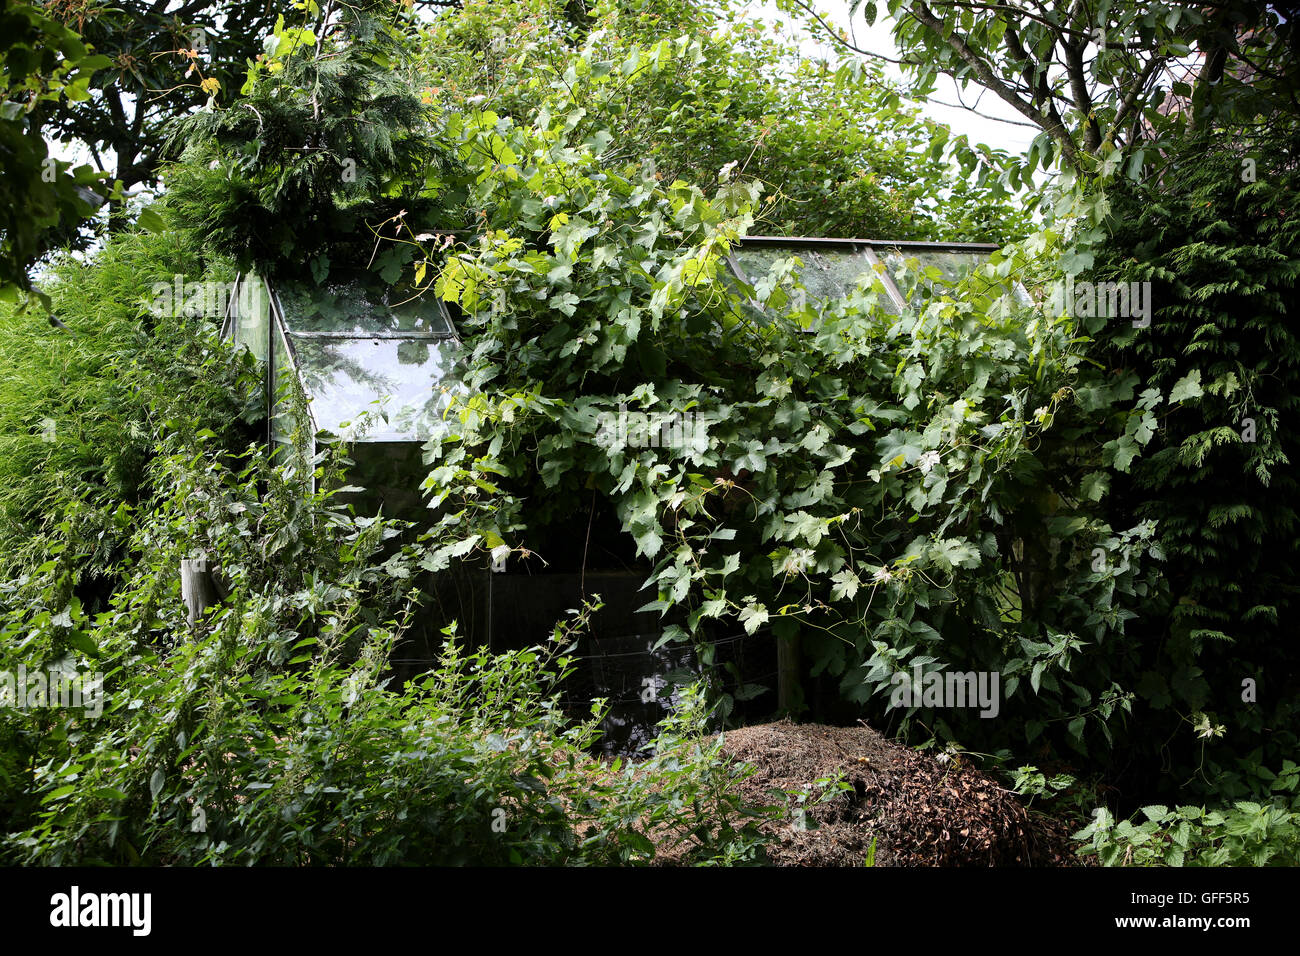 An overgrown garden greenhouse in Alton, Hampshire, UK. © Sam Stephenson/Alamy Stock Photo